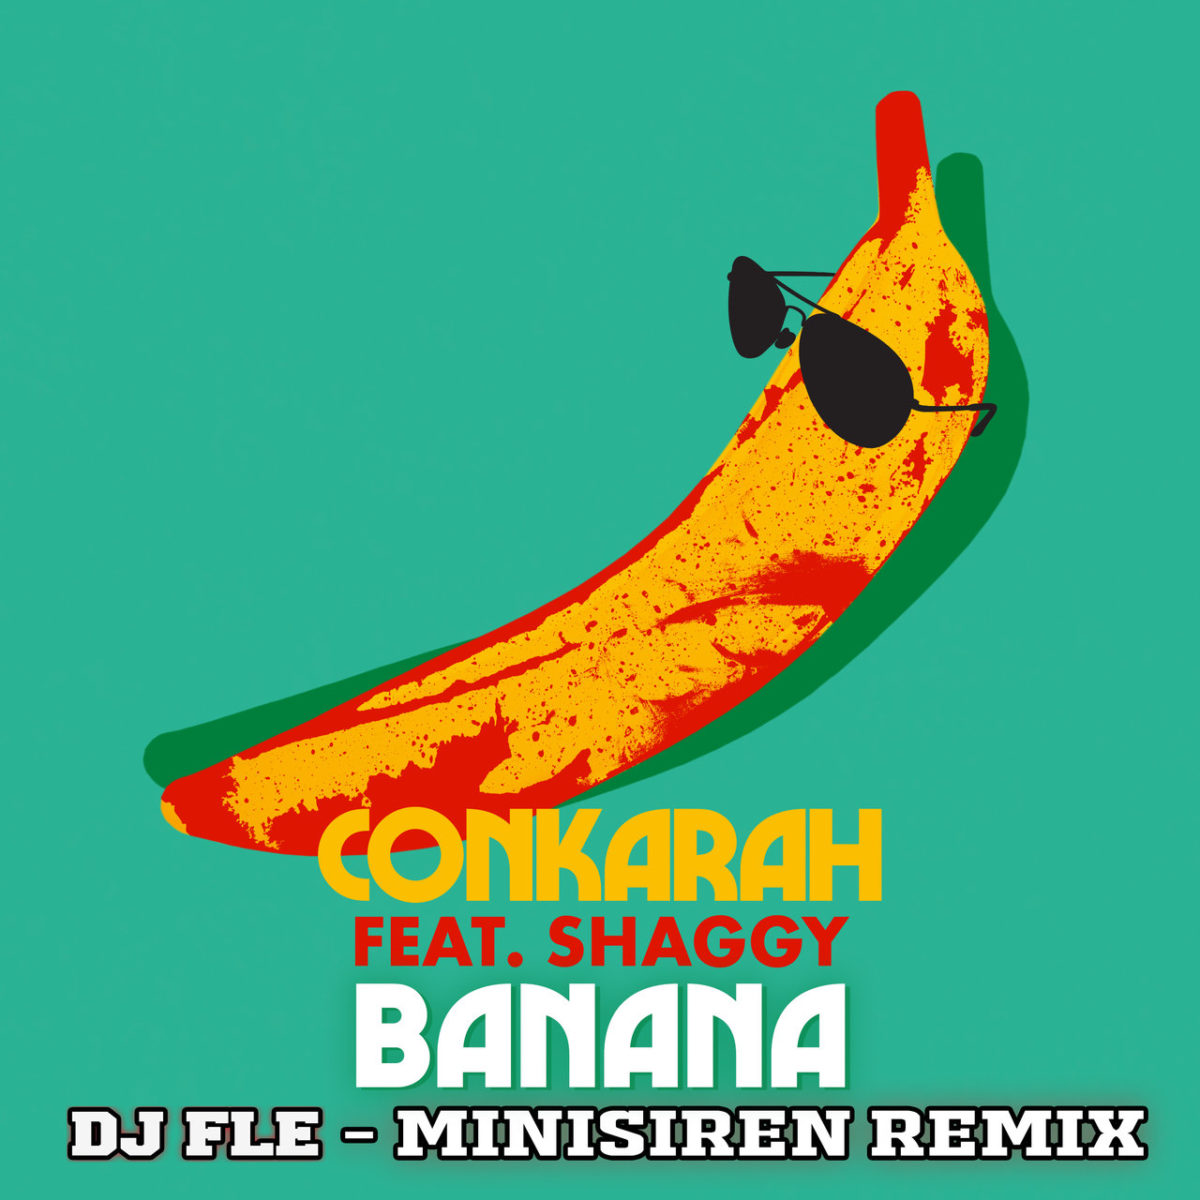 Conkarah - Banana (ft. Shaggy) (DJ FLE - Minisiren Remix) (Cover)